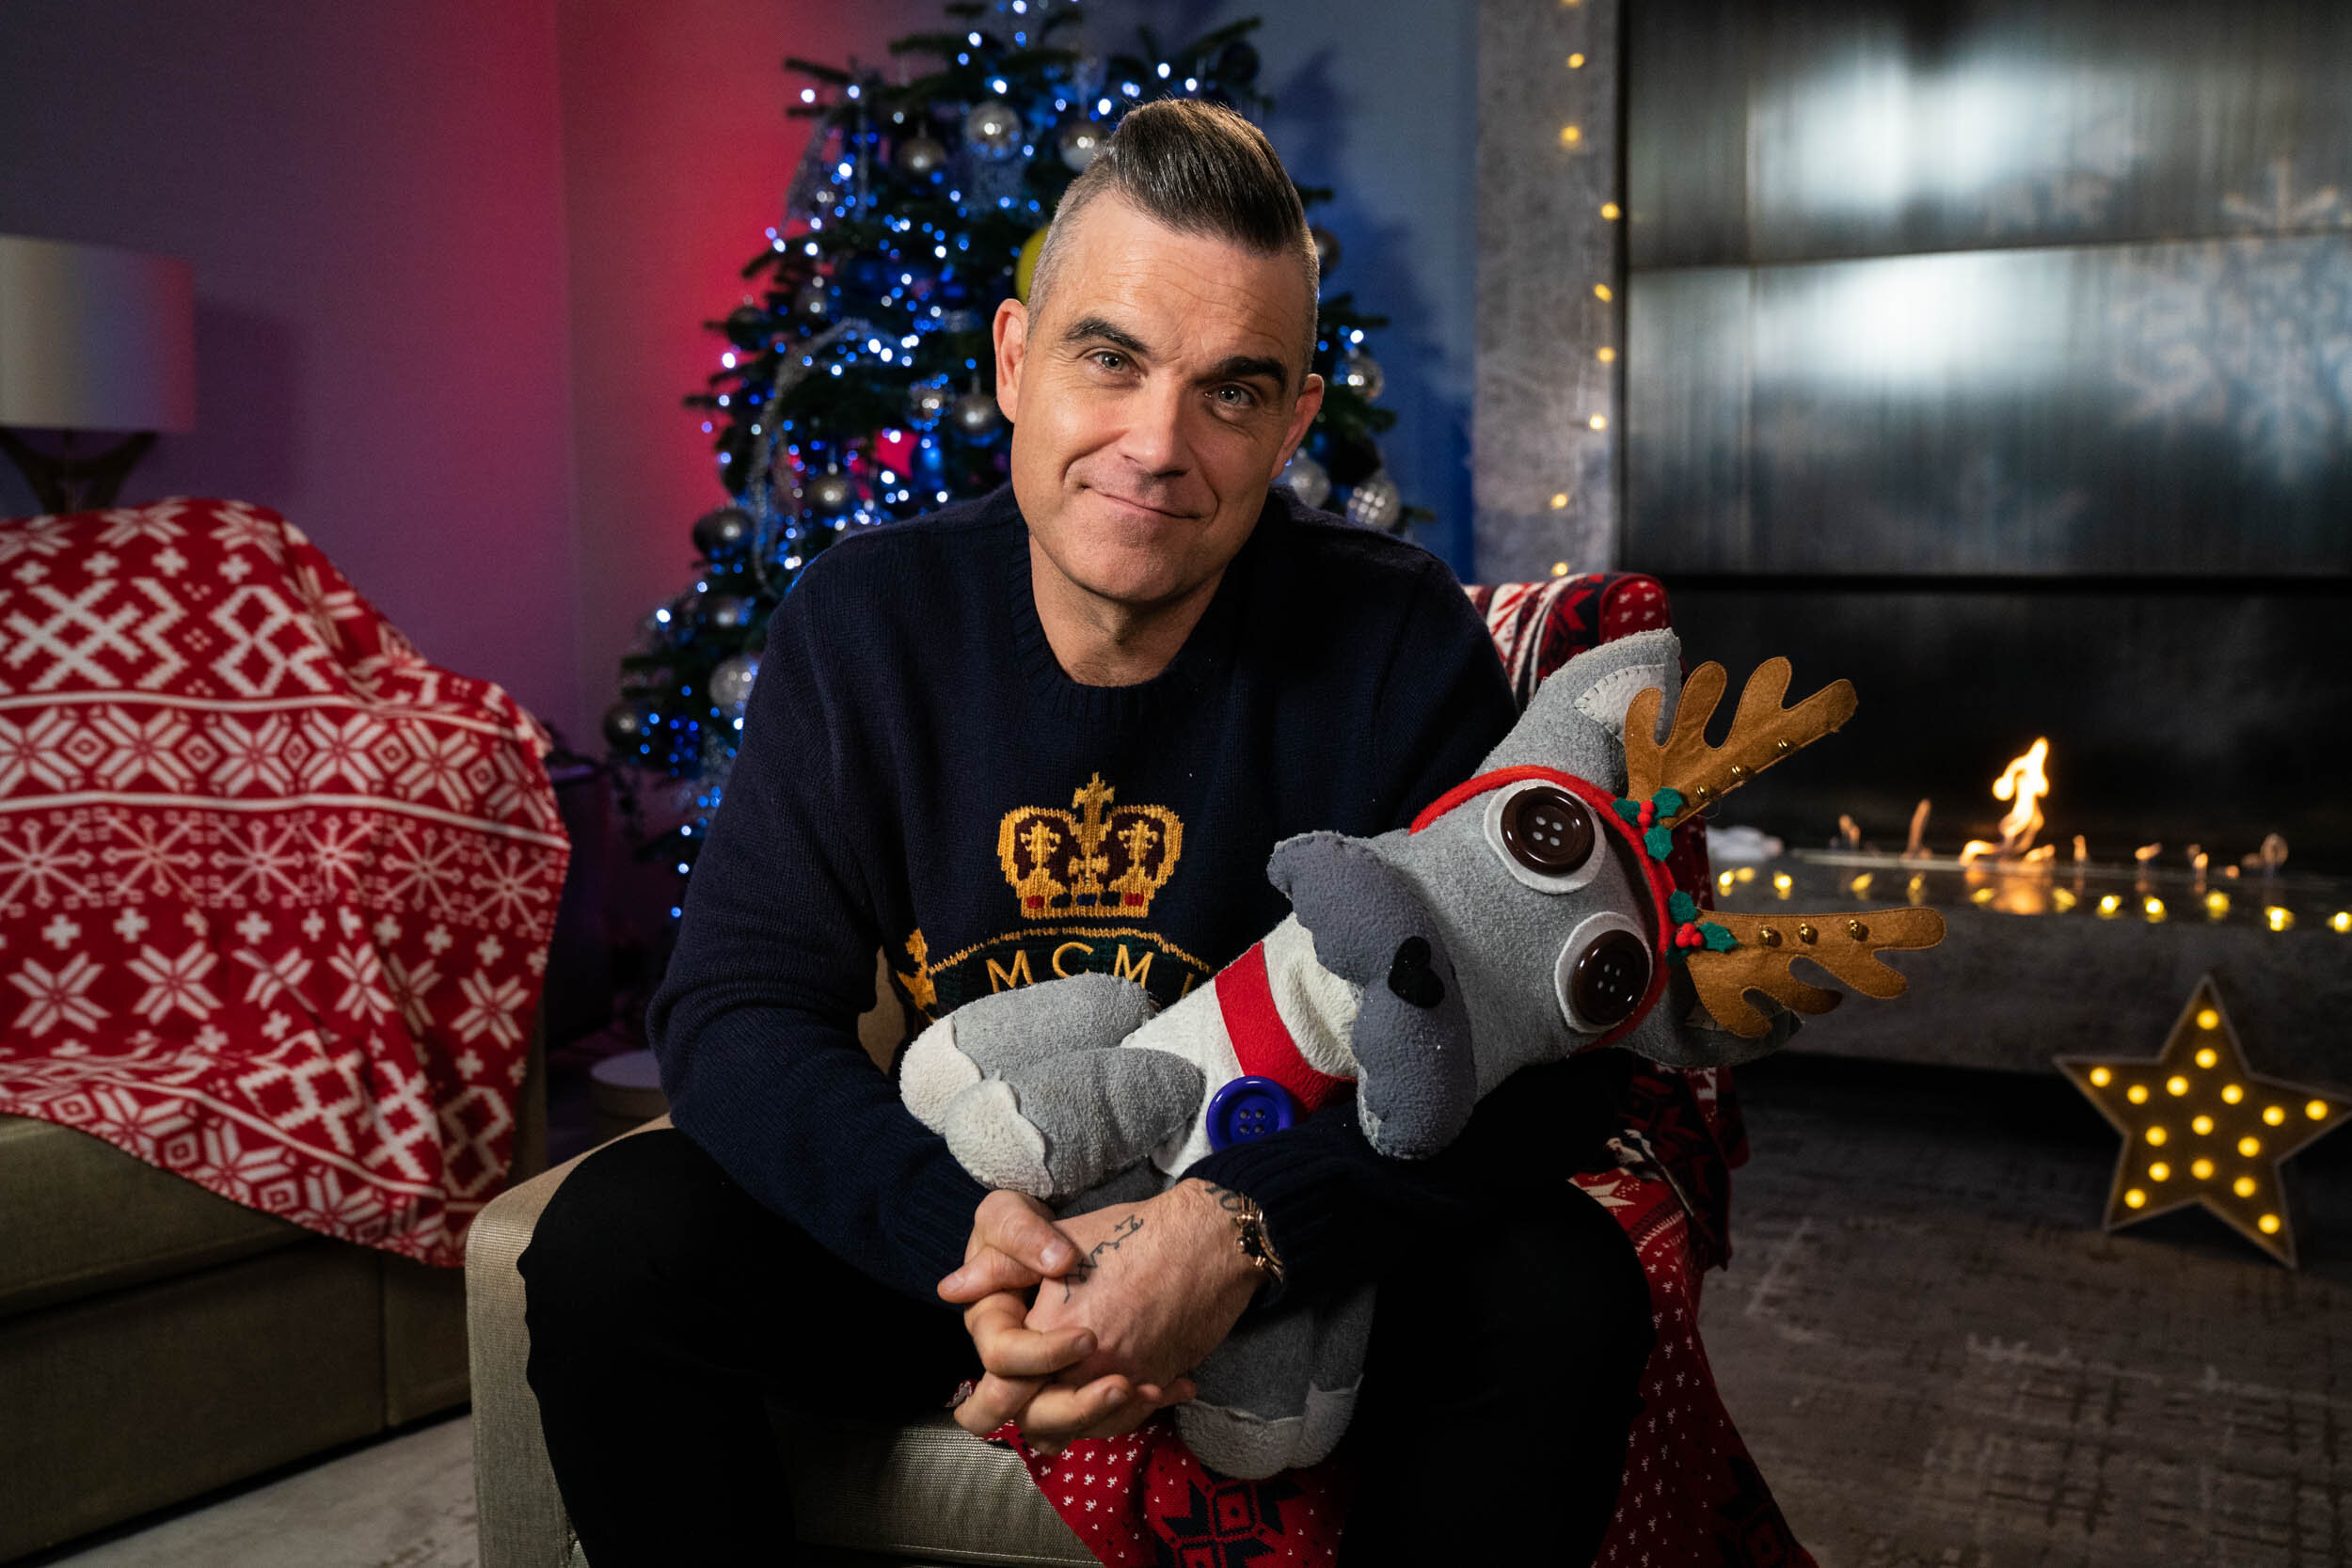  Robbie Williams   CBeebies / BBC 